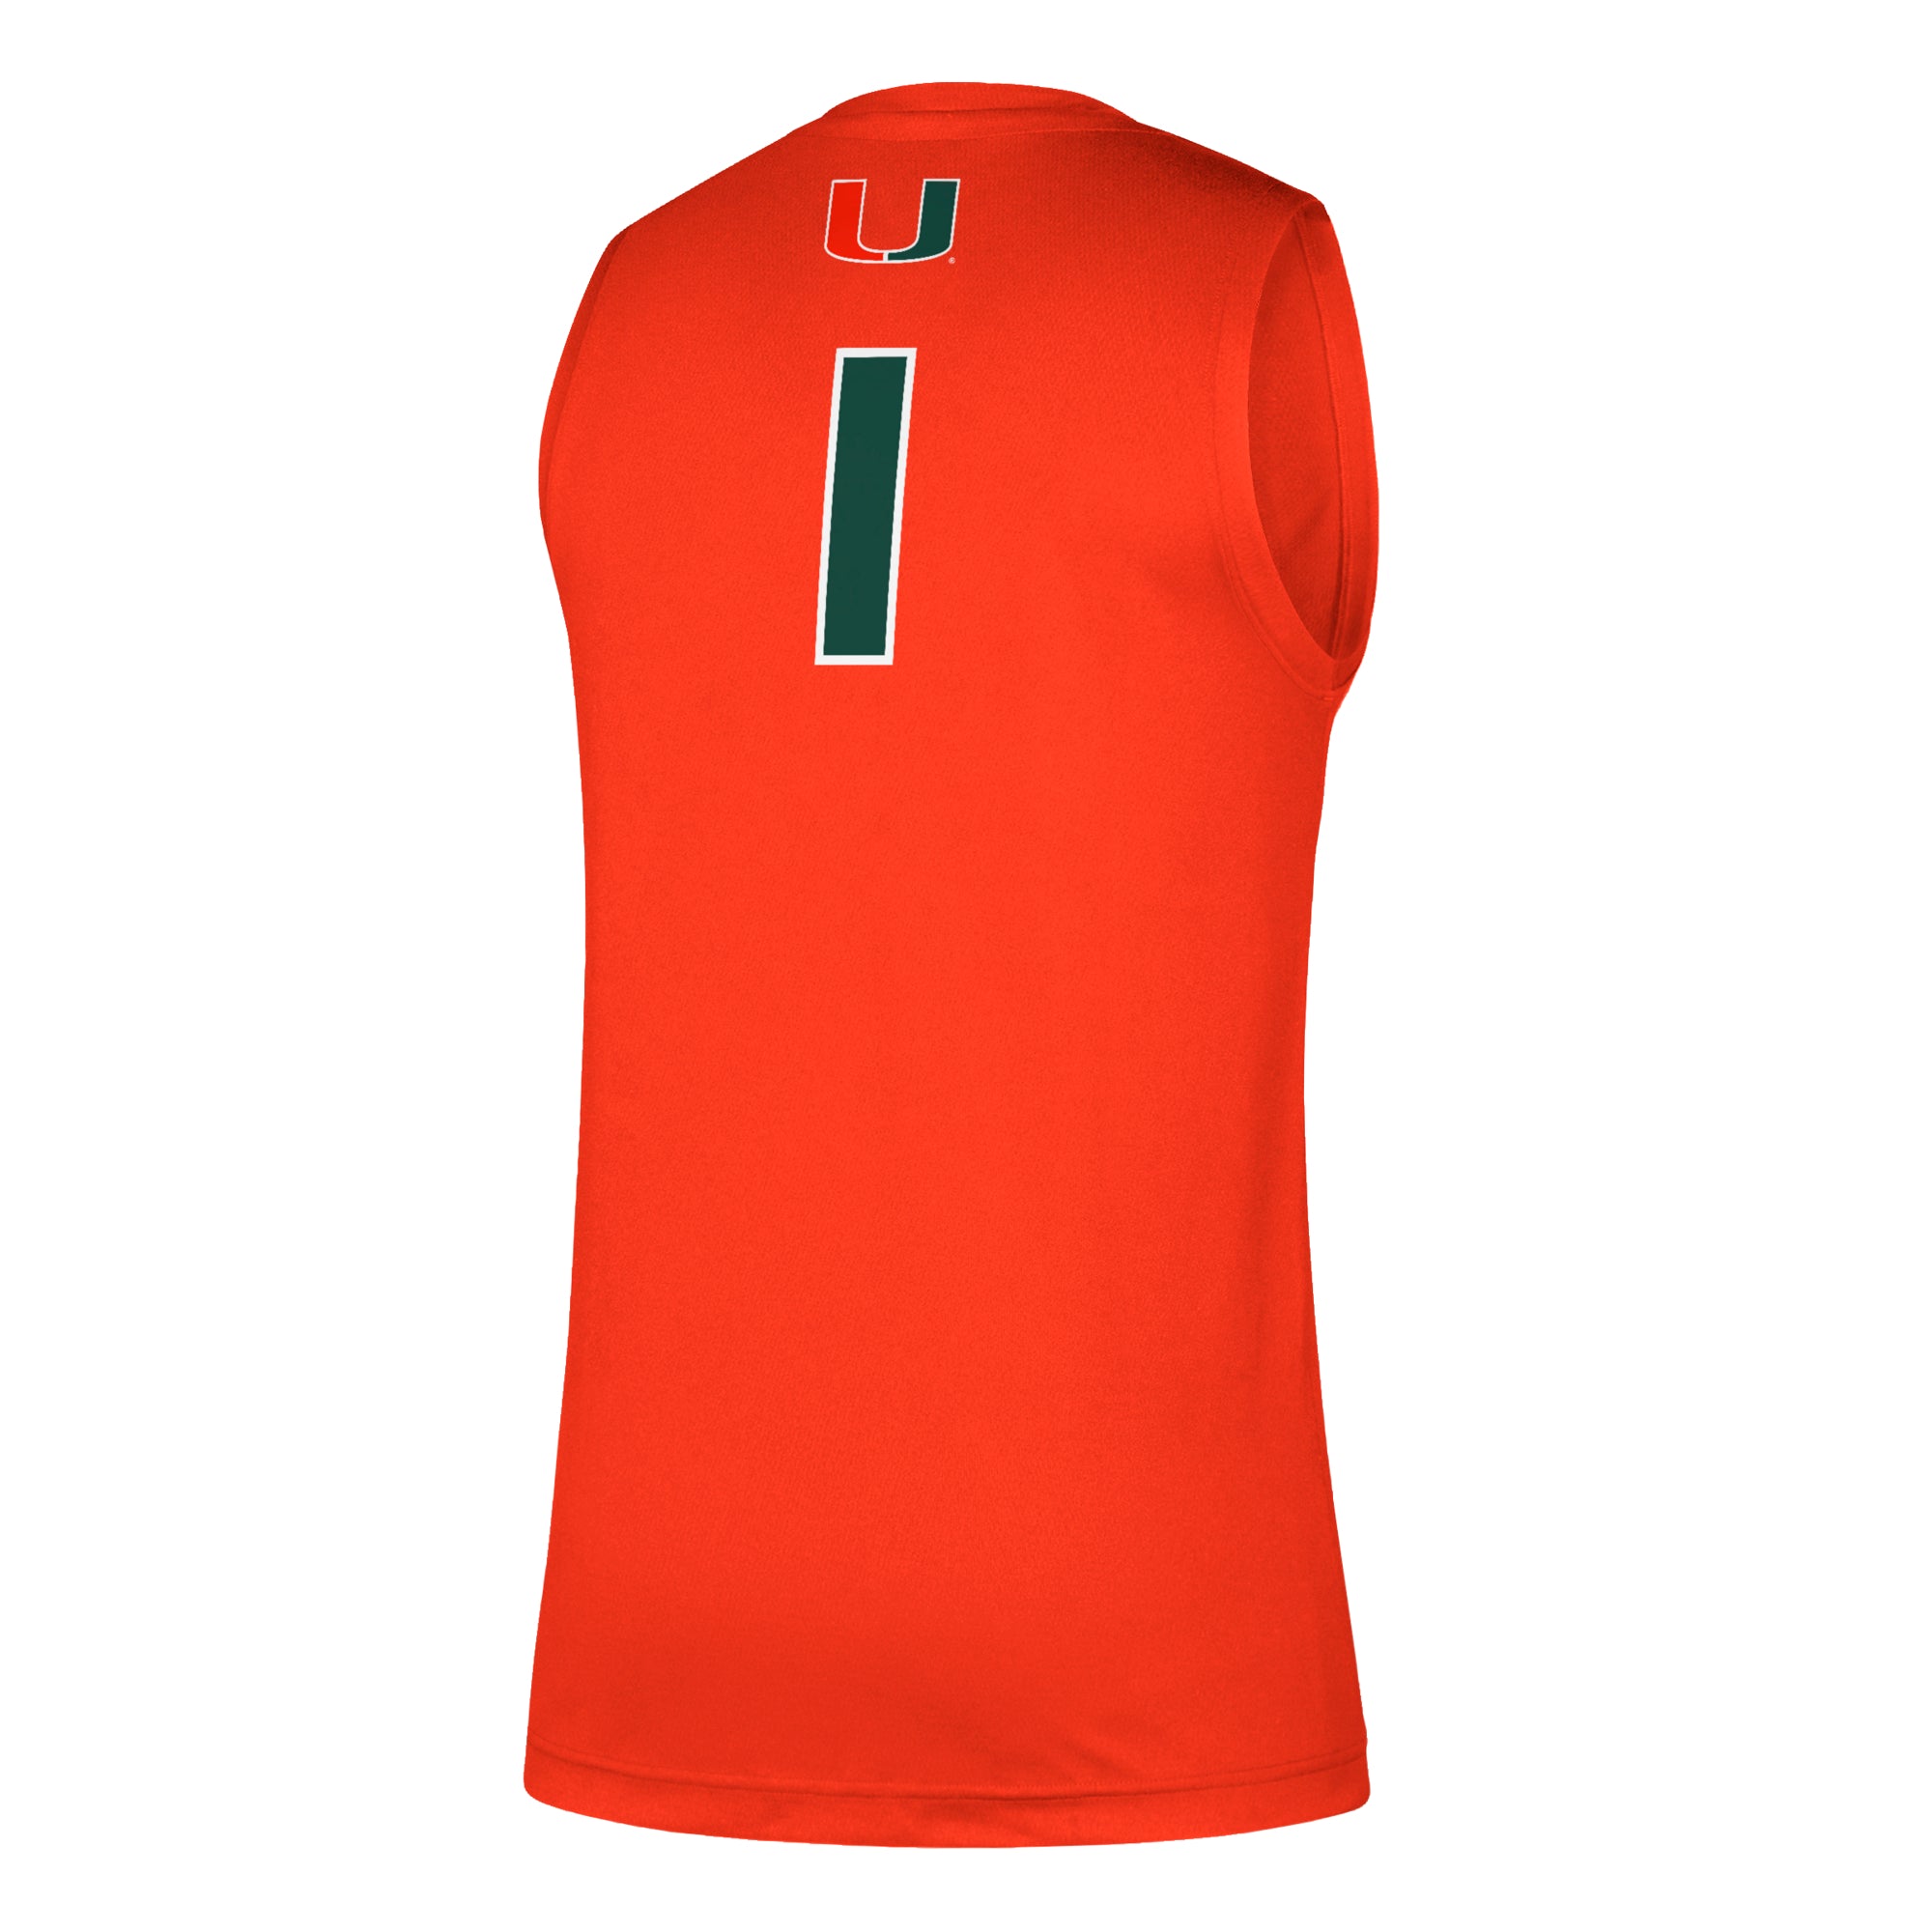 Miami Hurricanes adidas Swingman Basketball Jersey - Orange